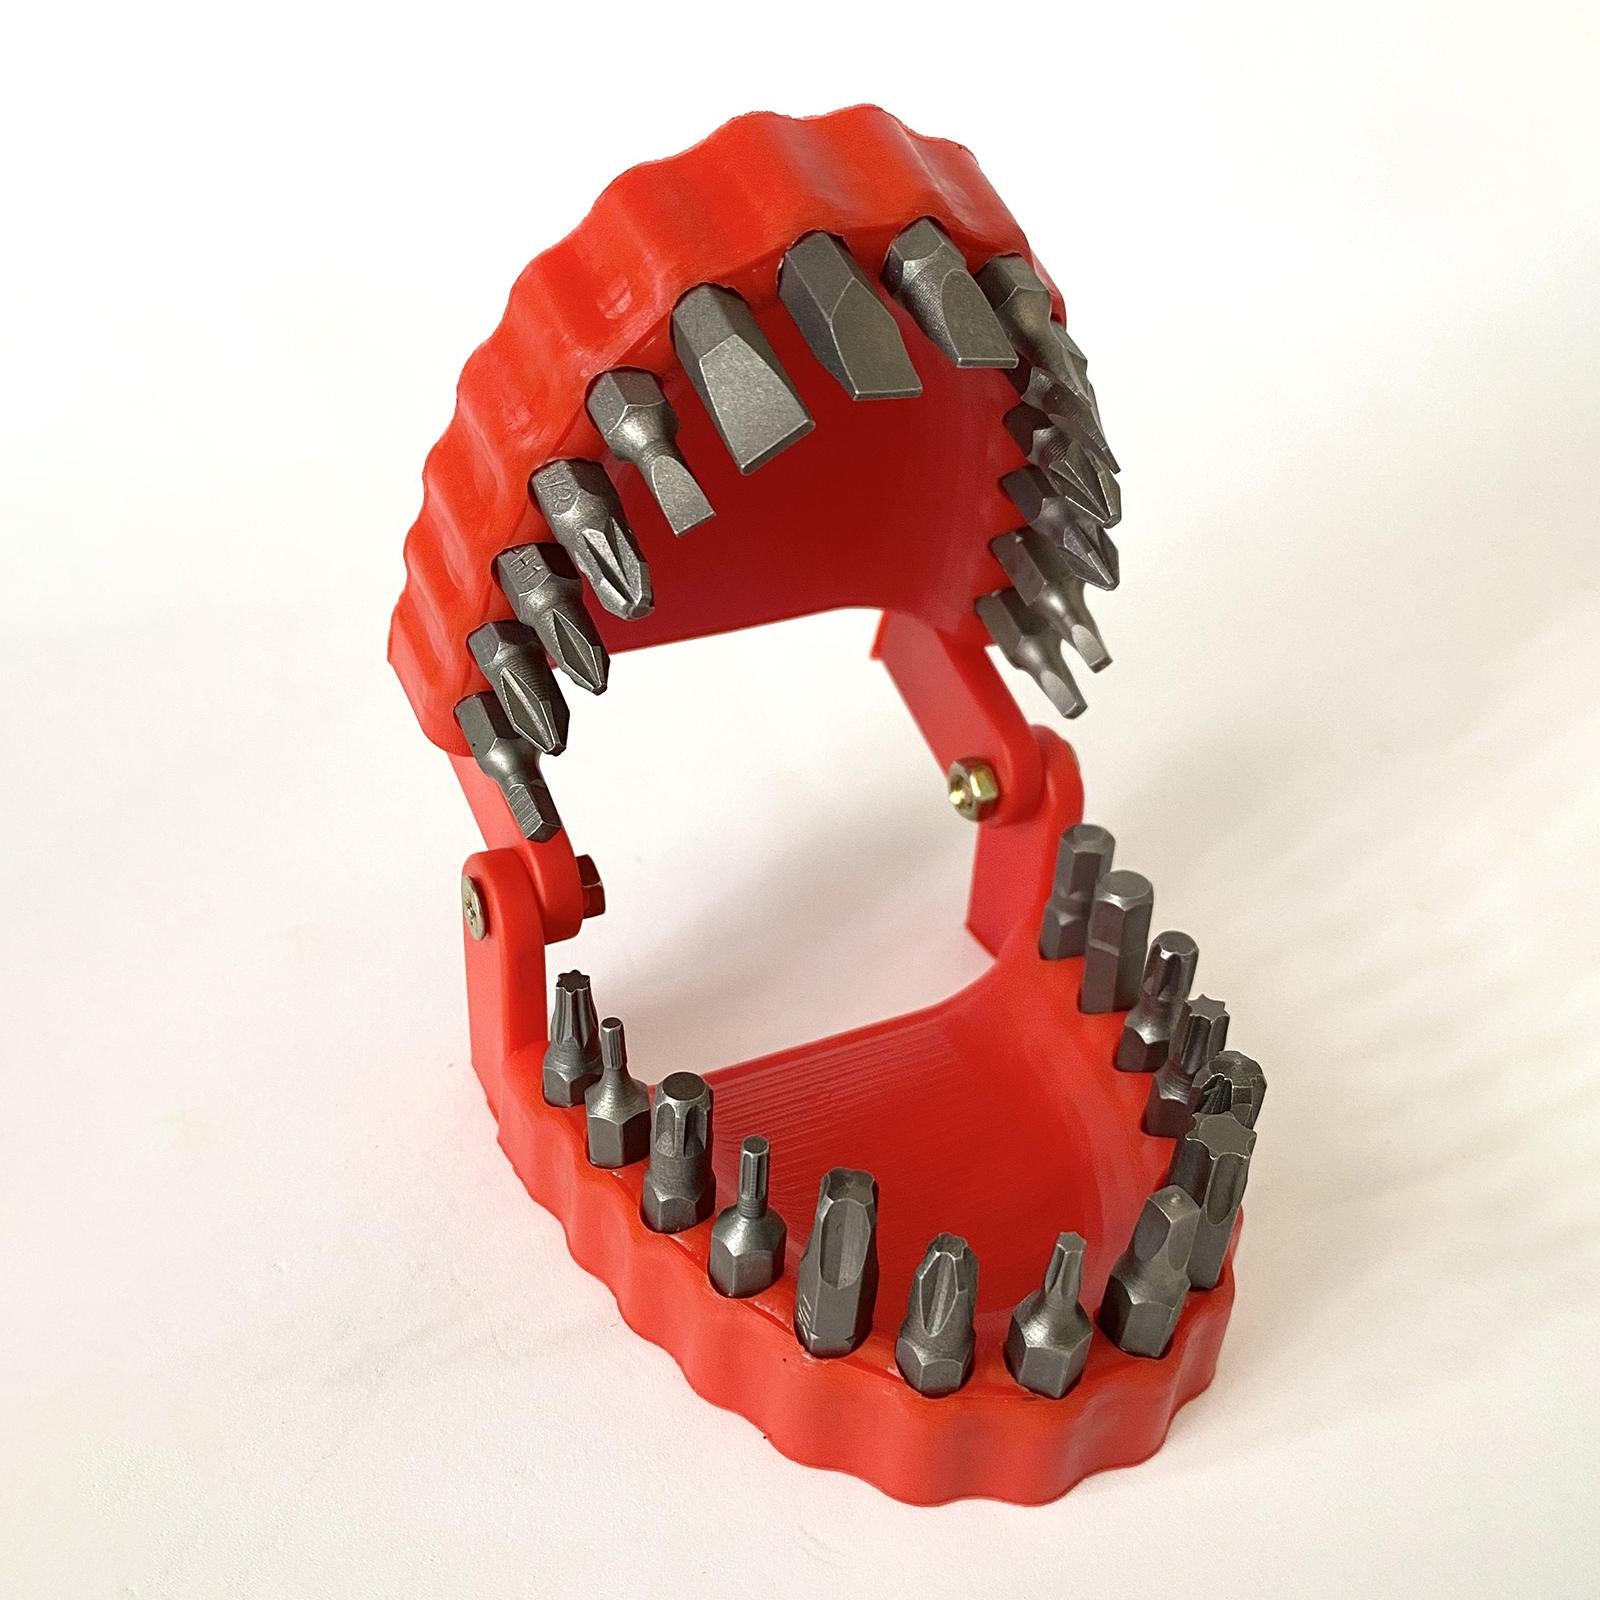 Denture Drill Bit Holder Teeth Model Design for Home Improvement Supplies